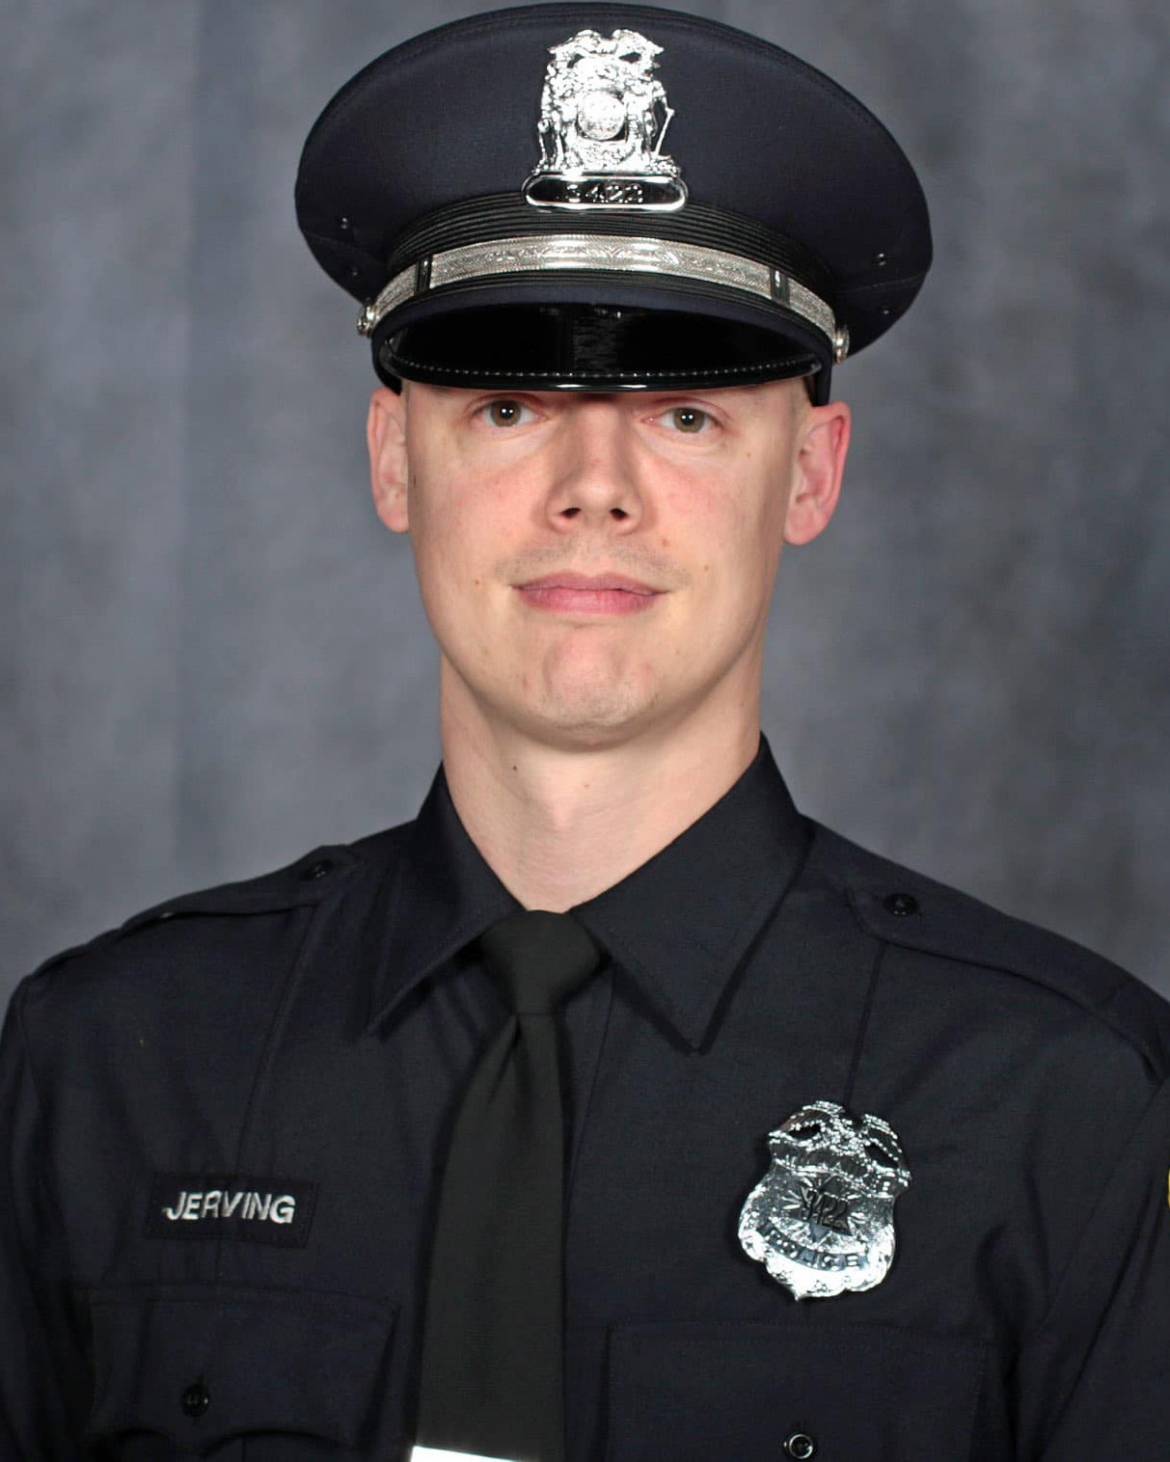 Police Officer Peter E.C. Jerving